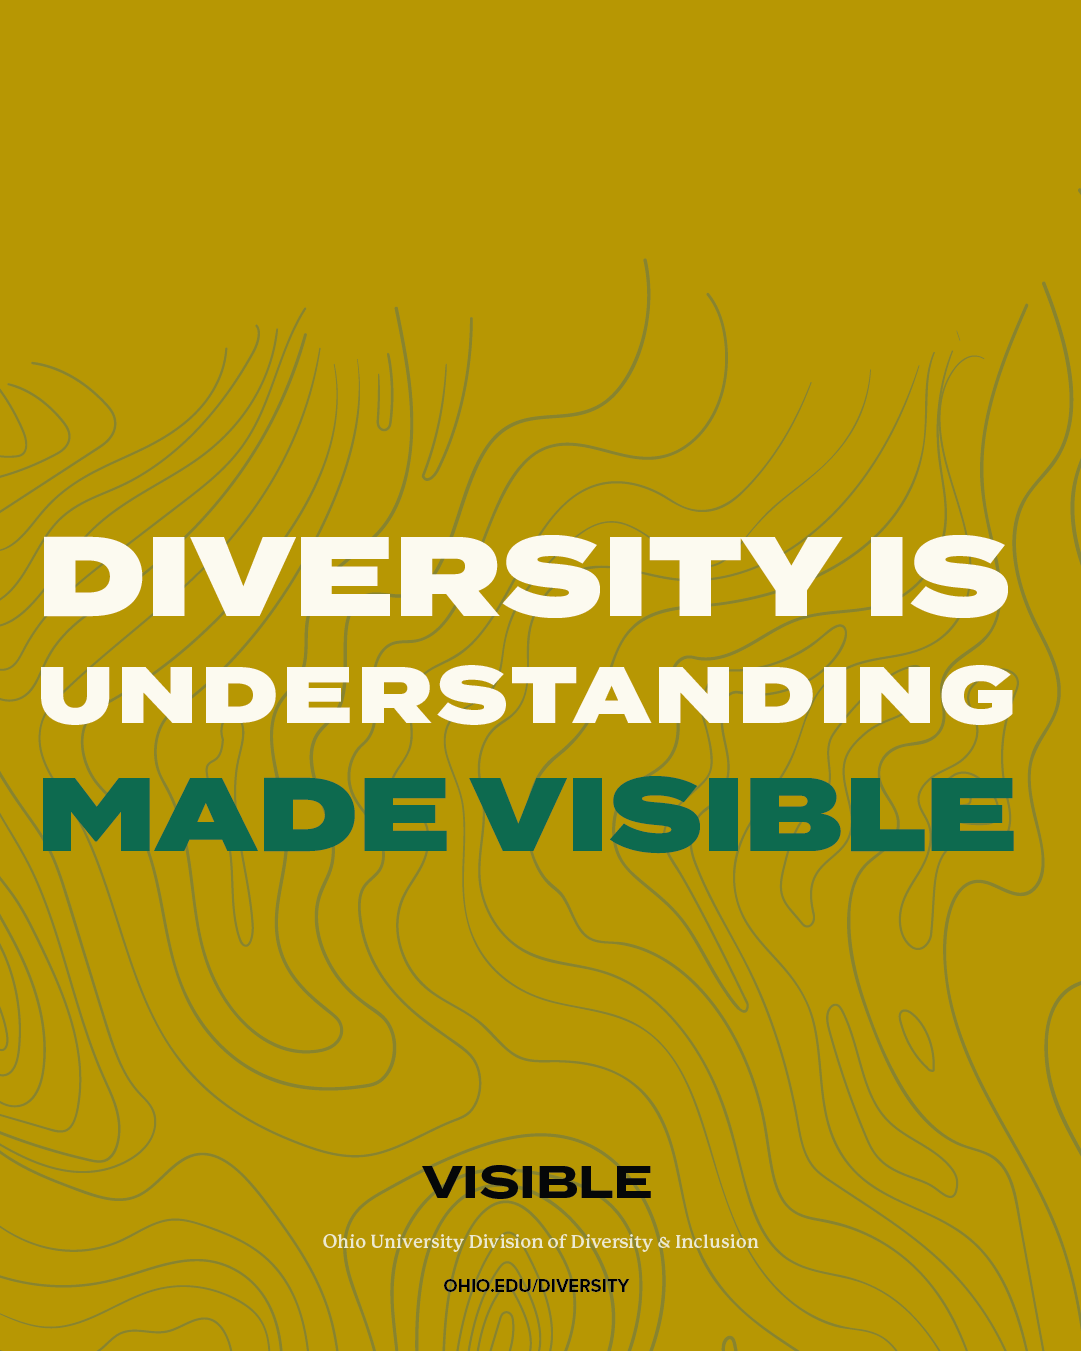 Diversity is understanding made visible.